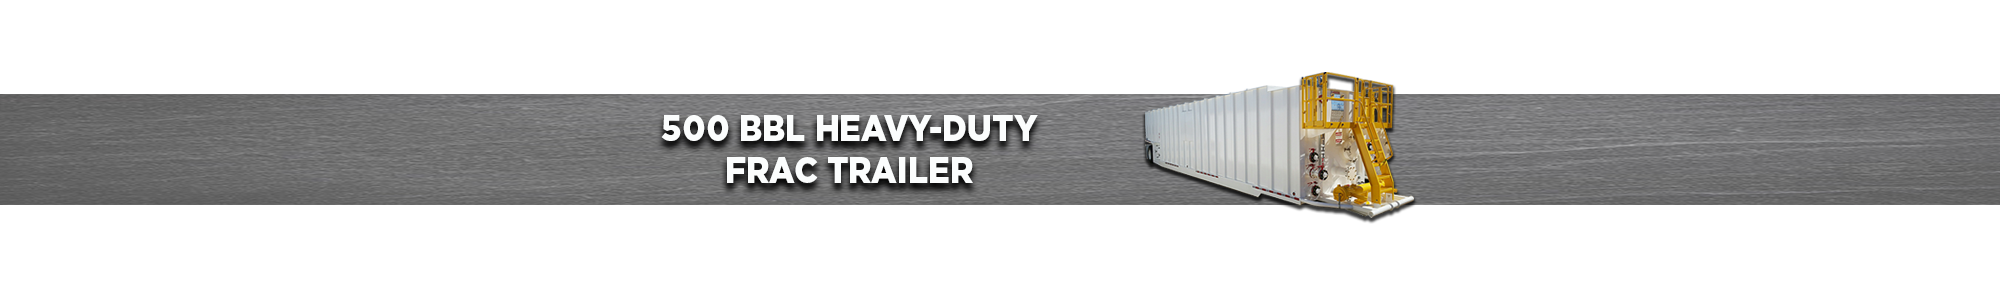 500 BBL Heavy-Duty Frac Trailer